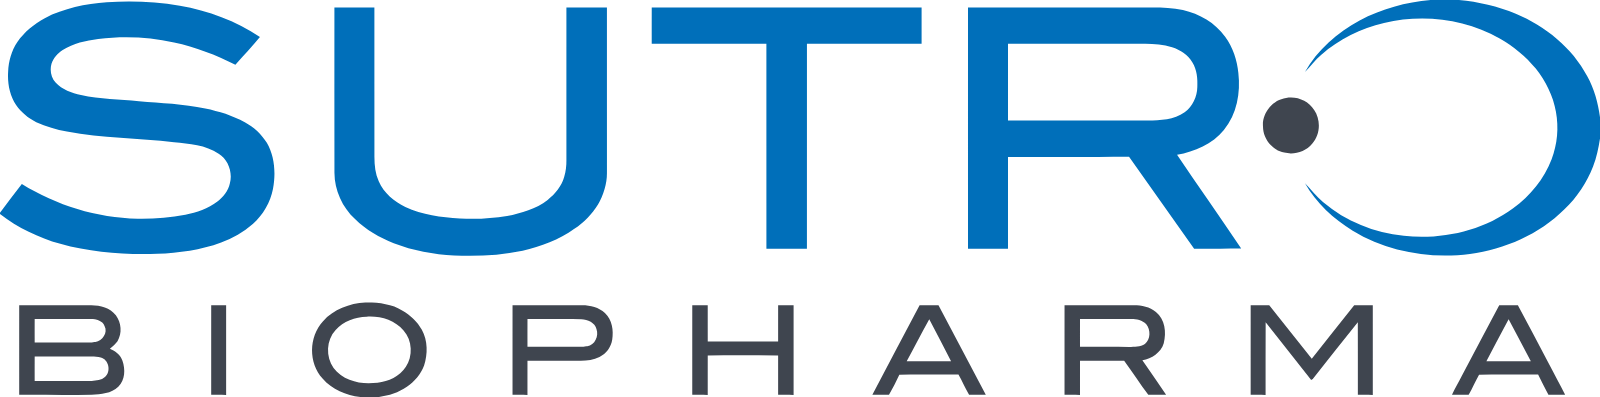 Sutro Biopharma logo large (transparent PNG)